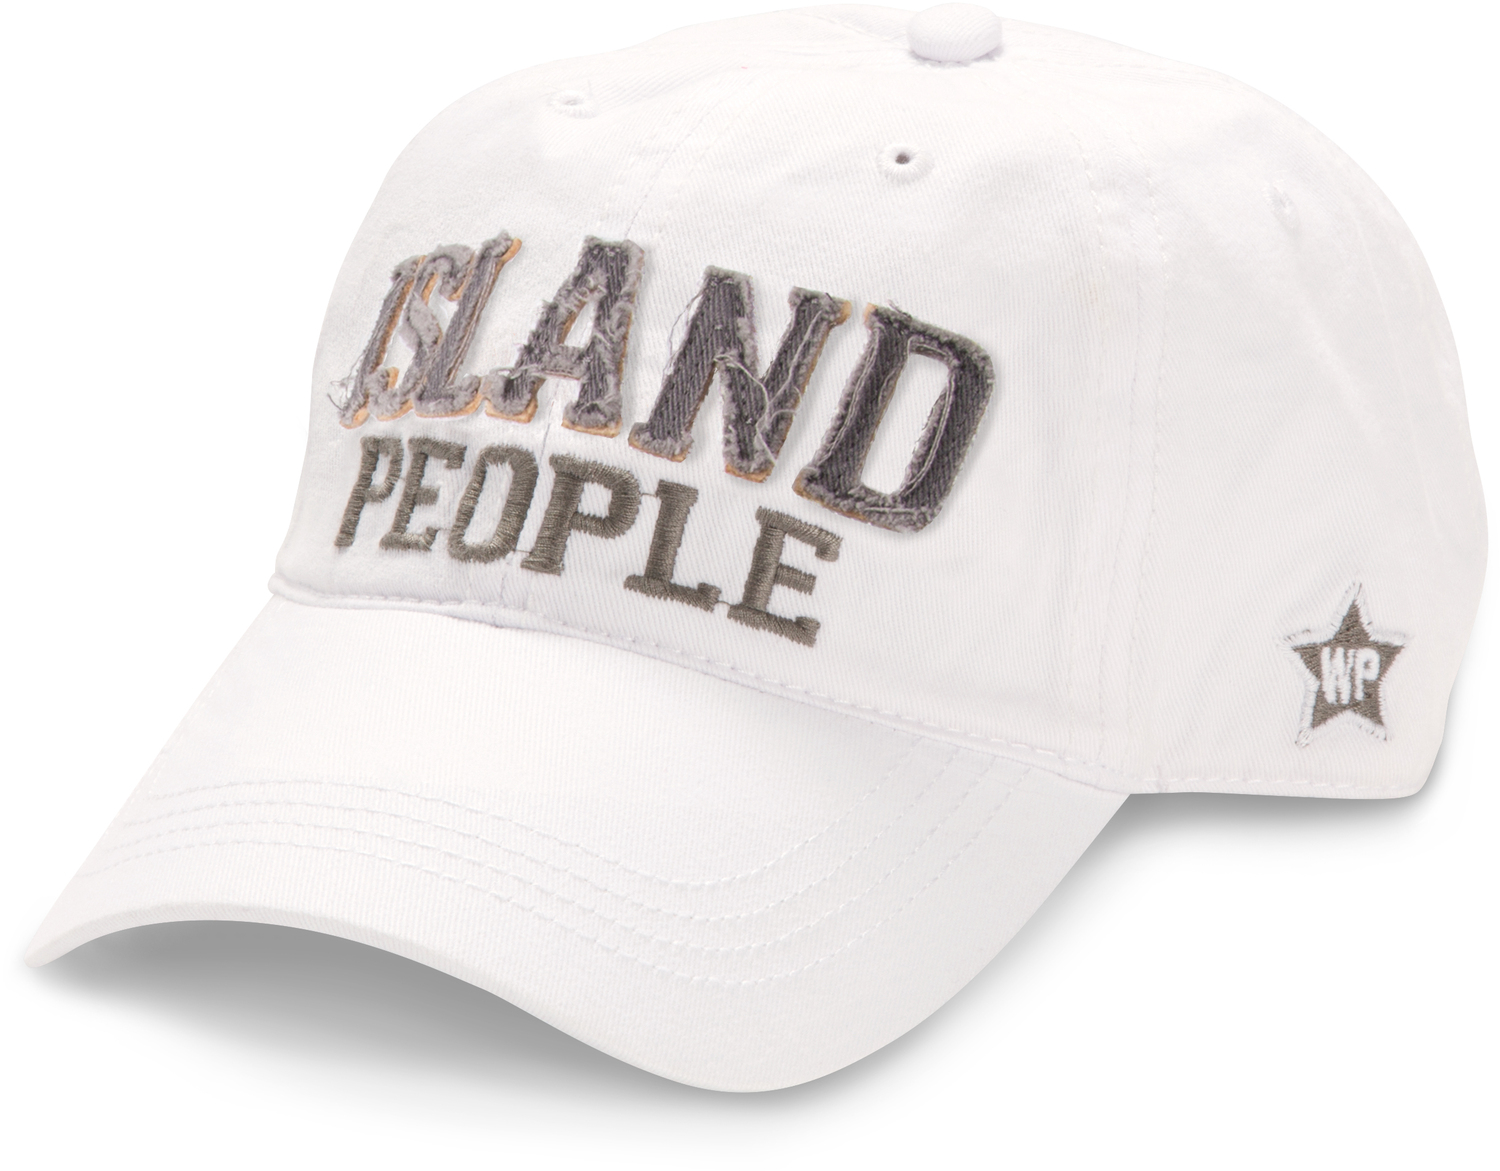 Island People by We People - Island People - White Adjustable Hat